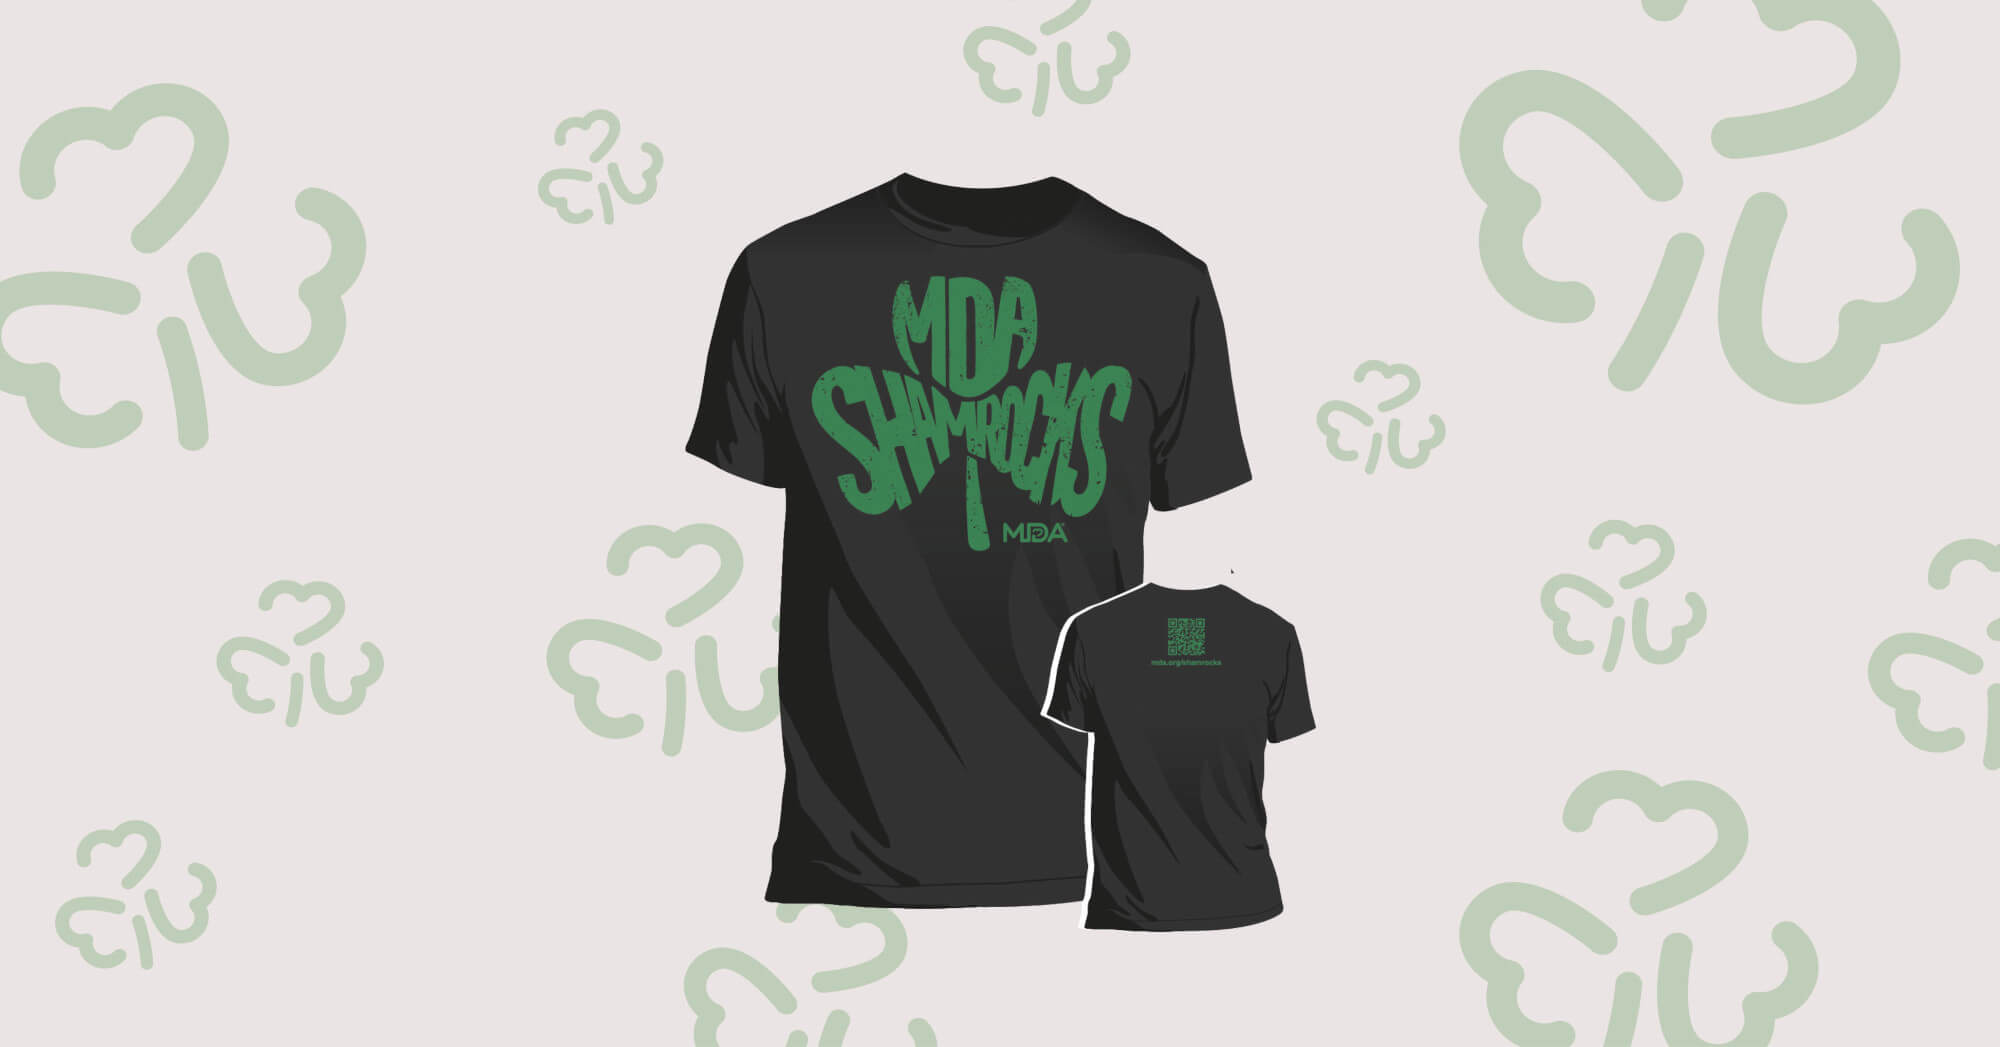 The 2024 MDA Shamrocks t-shirt. It's a stylized clover that says MDA Shamrocks.